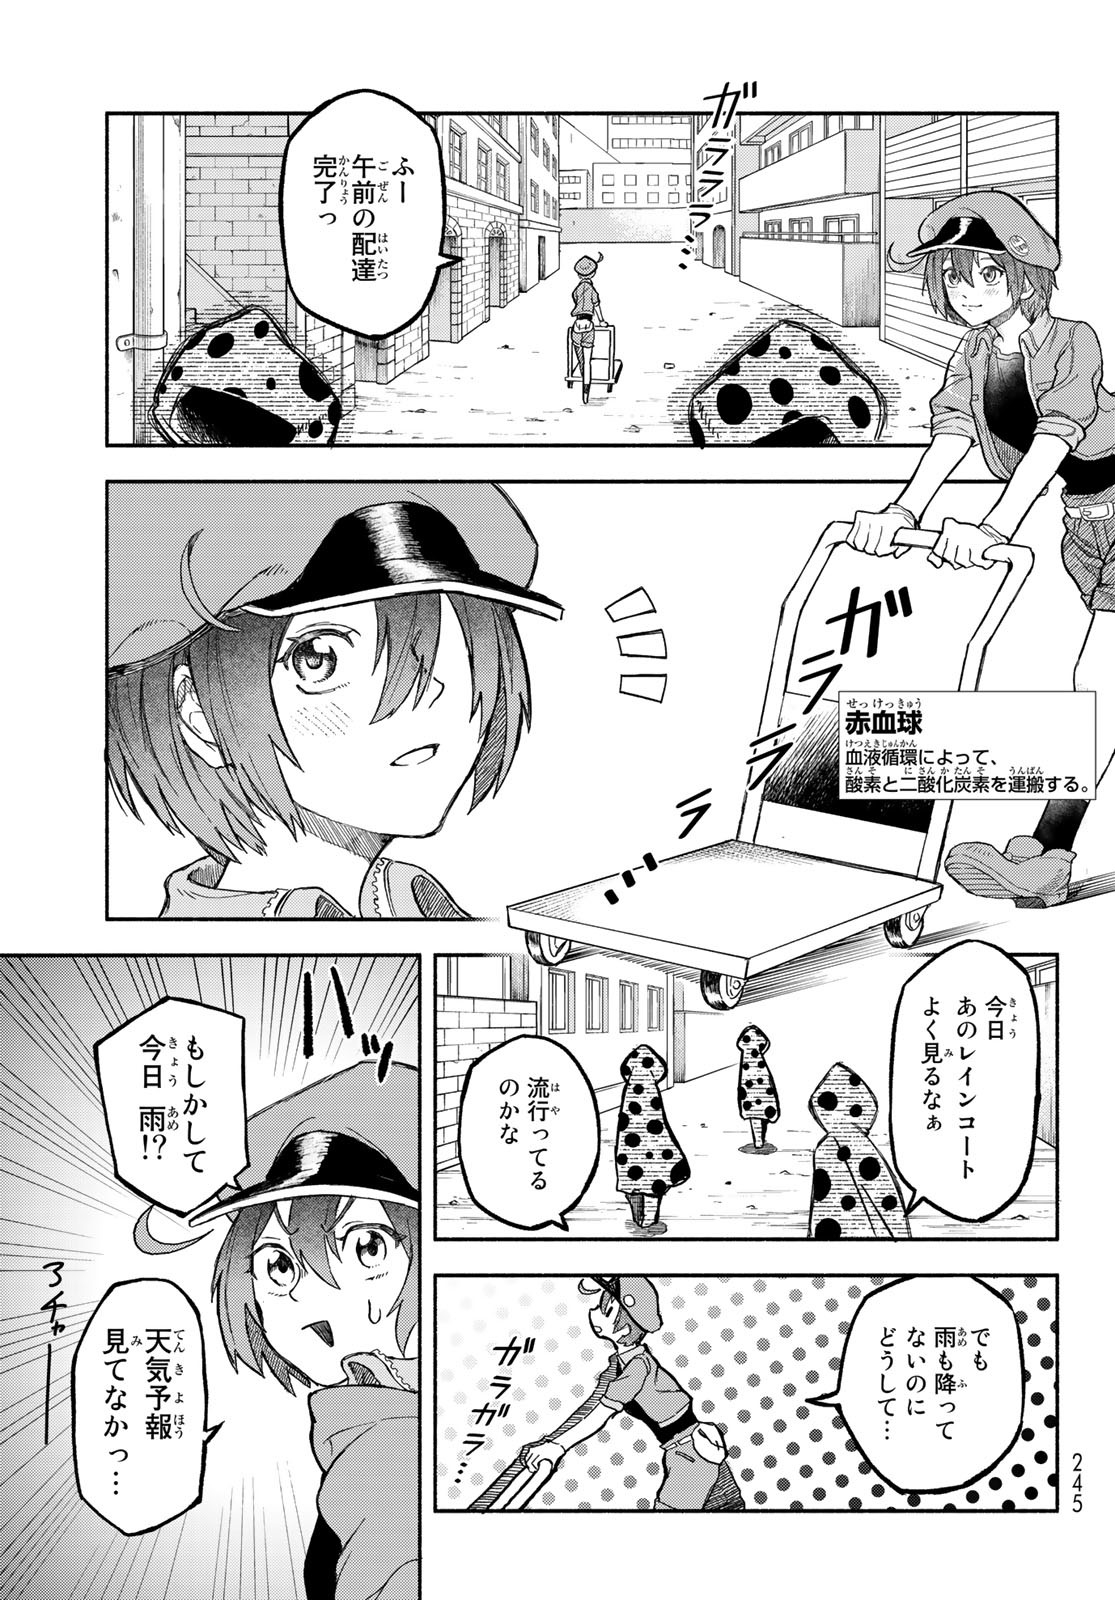 Hataraku Saibou Okusuri - Chapter 2 - Page 3